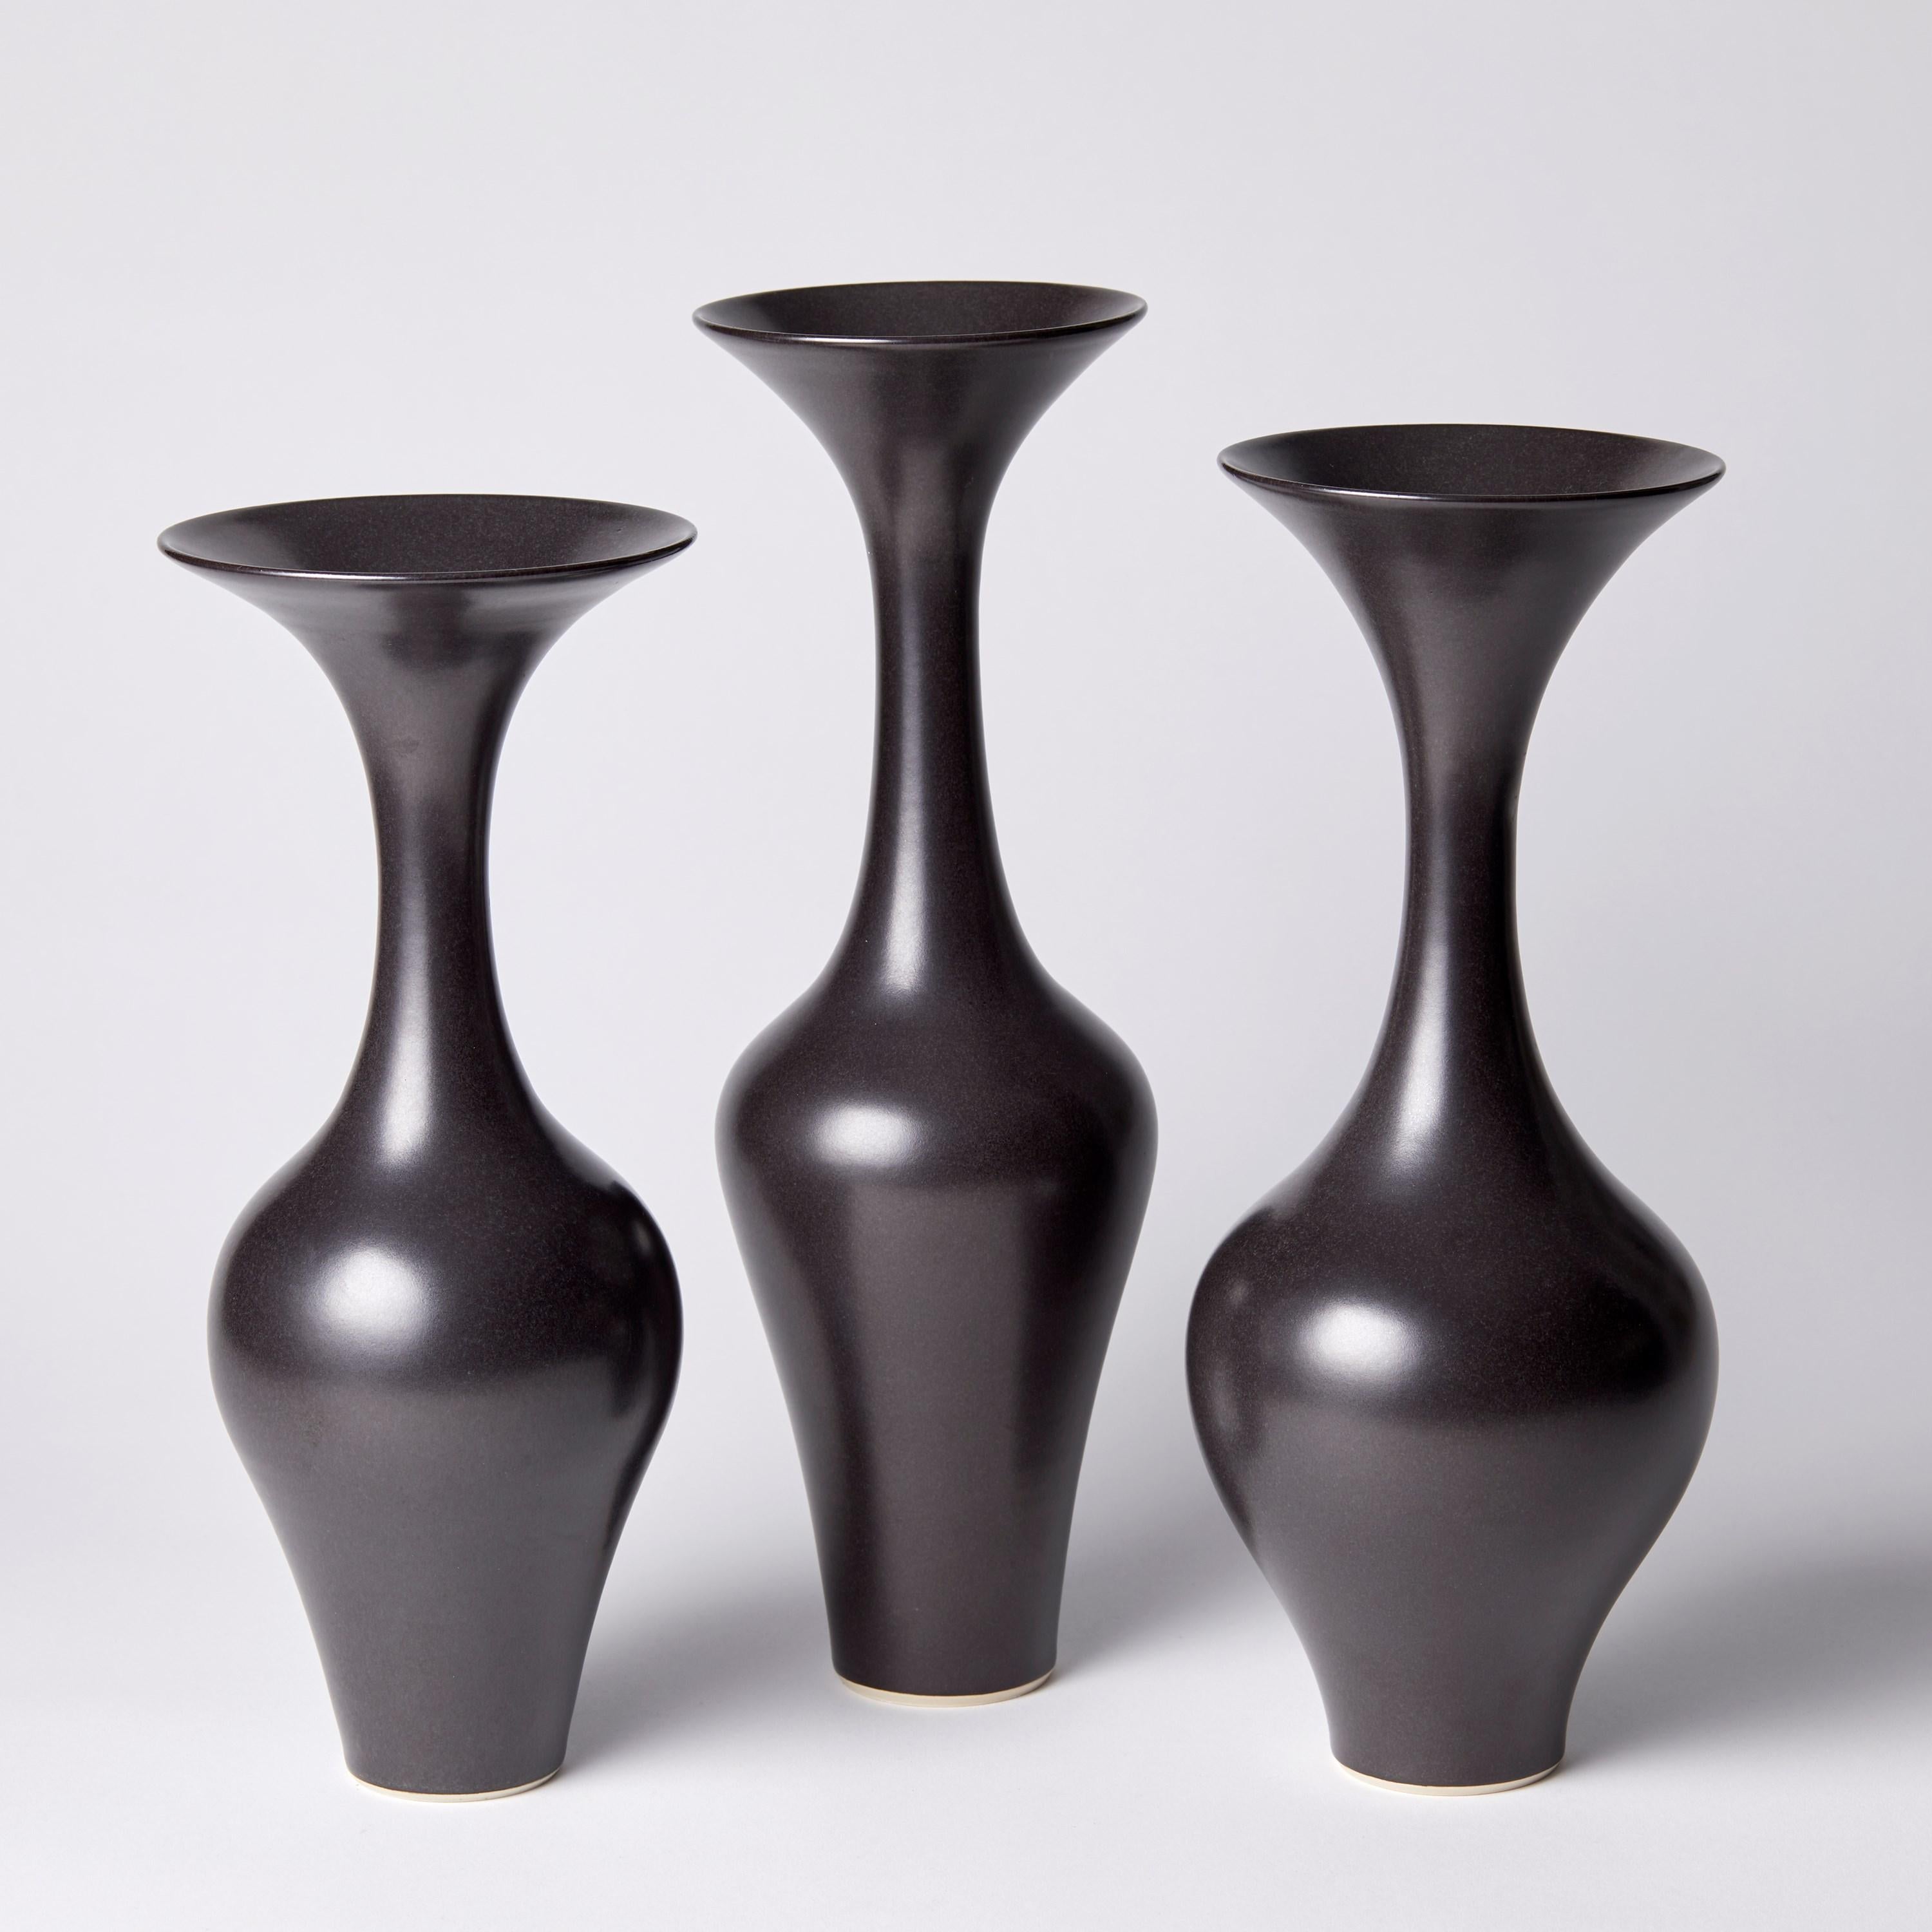 Organic Modern Black Classic Vase I, a unique black / ebony porcelain vase by Vivienne Foley